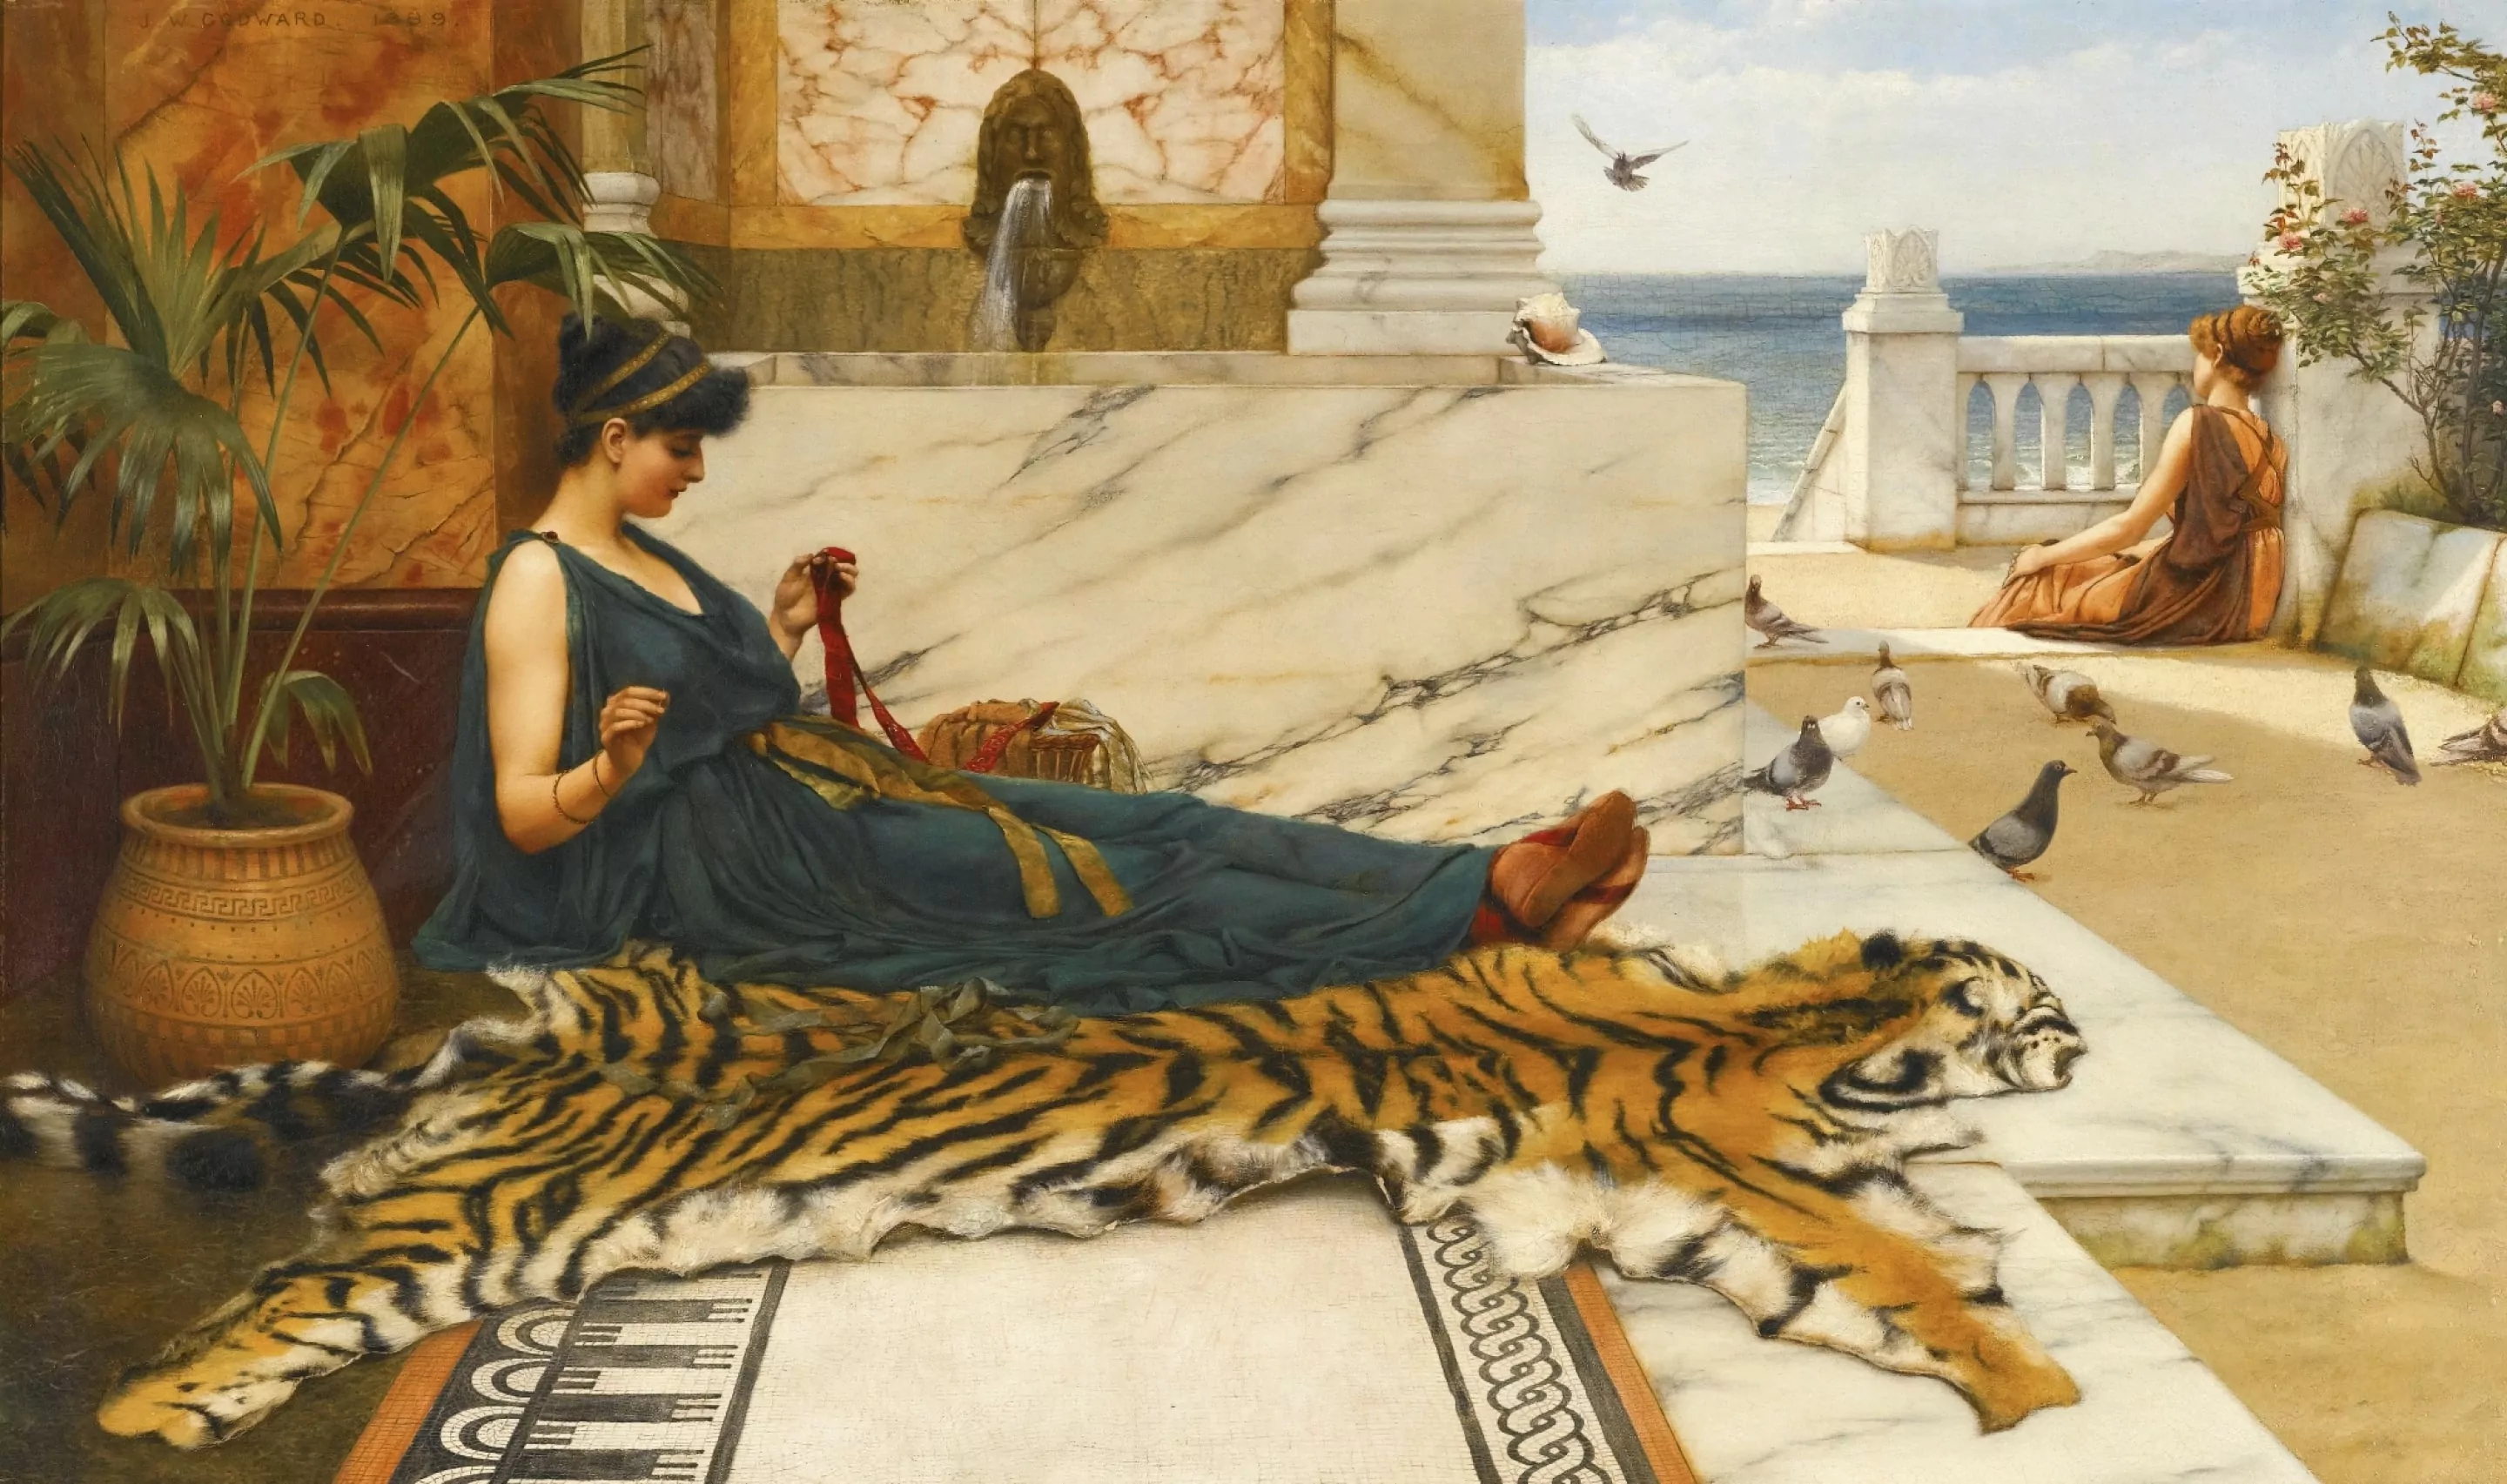 The Tigerskin (Sewing Girl), John William Godward